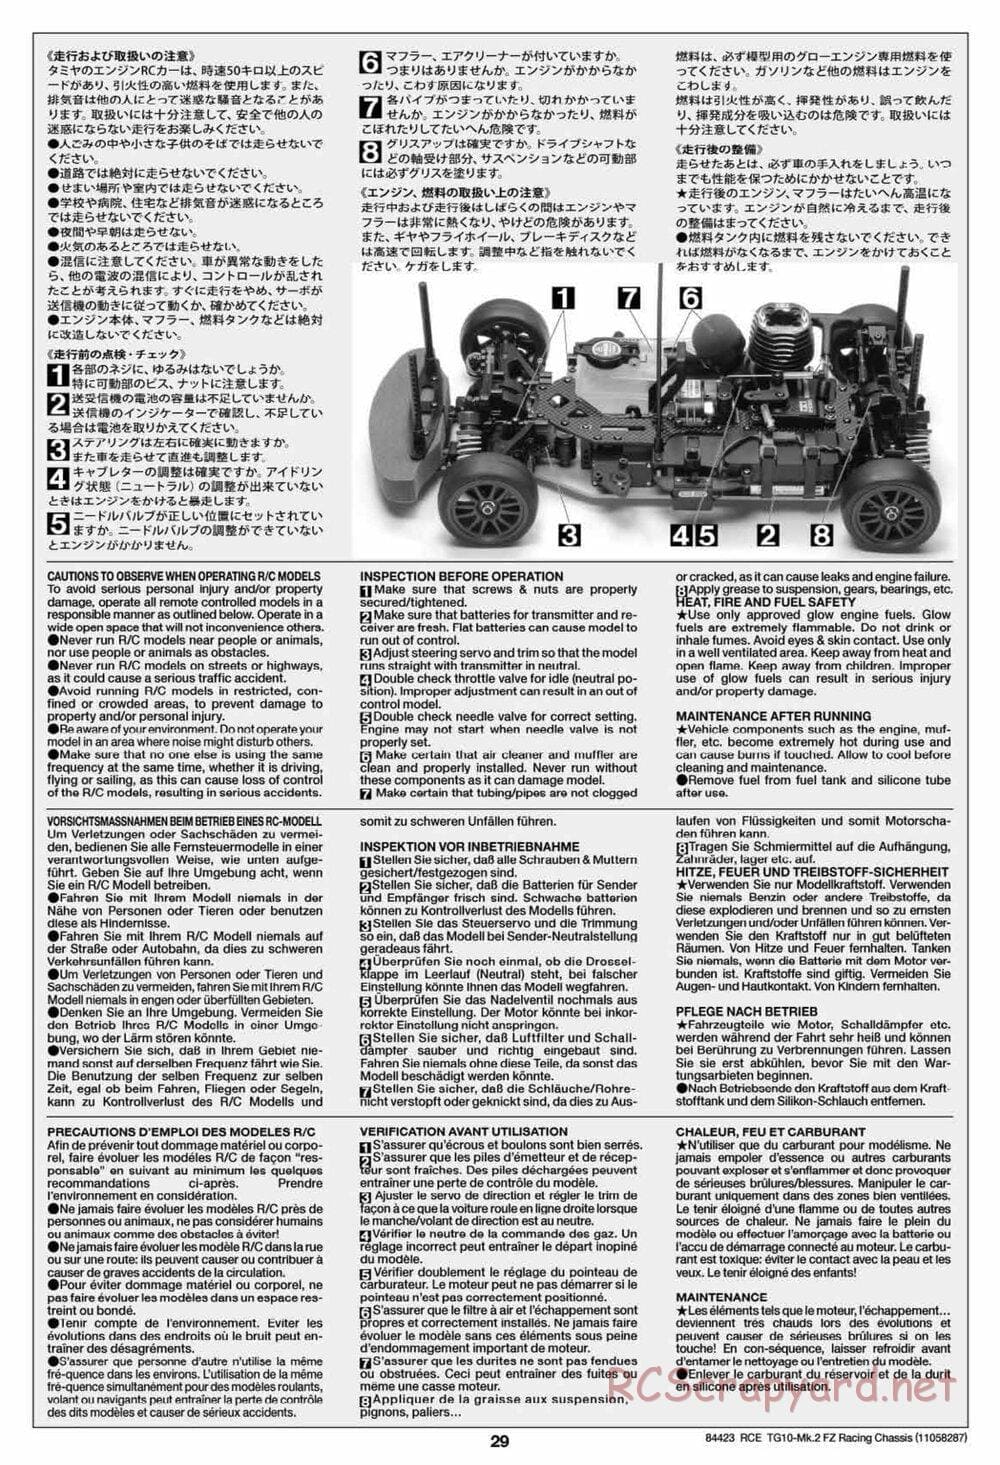 Tamiya - TG10 Mk.2 FZ Racing Chassis - Manual - Page 29